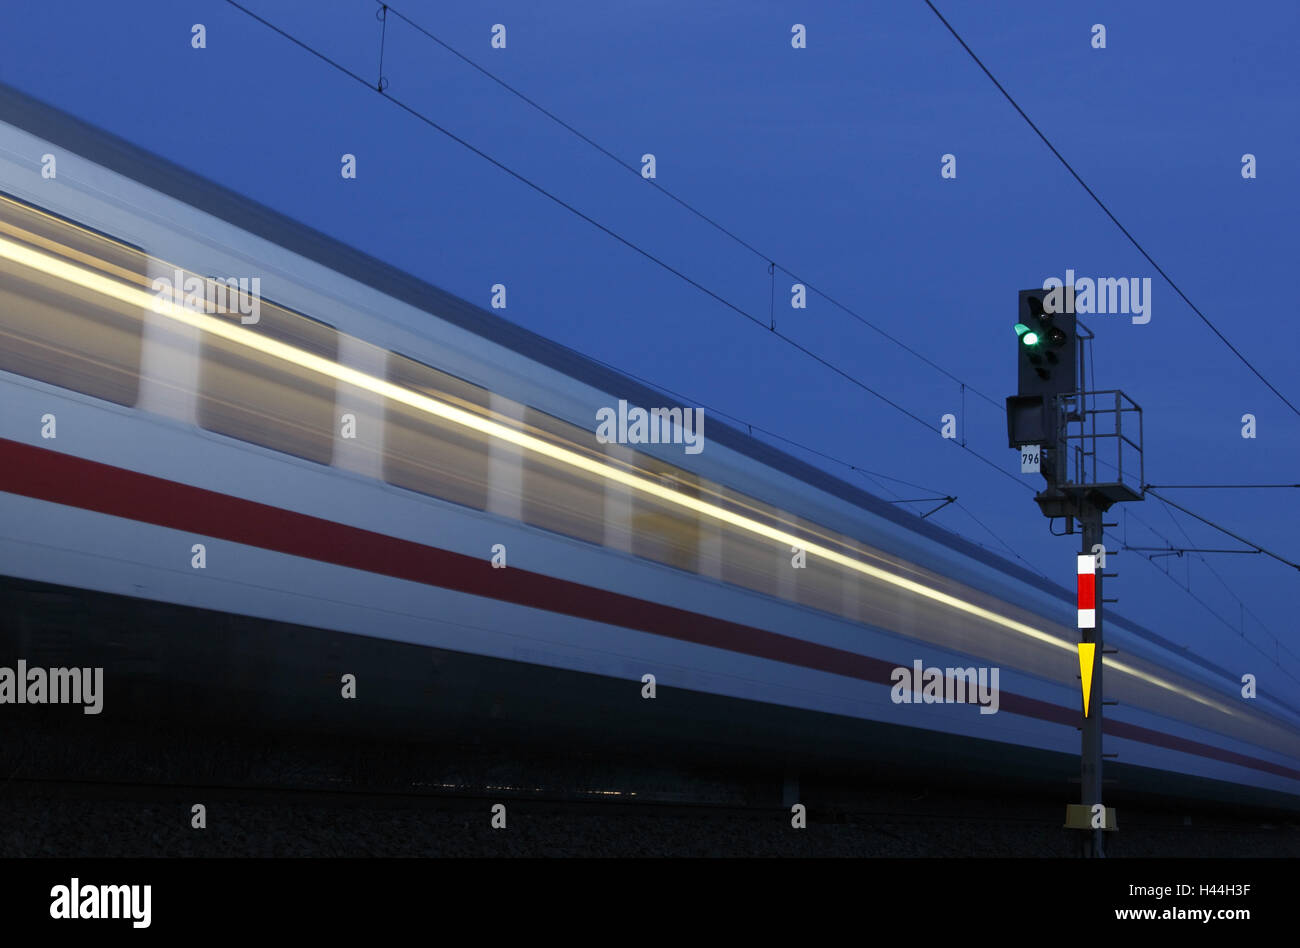 Section, intercity express, light signal, green, dusk, Stock Photo